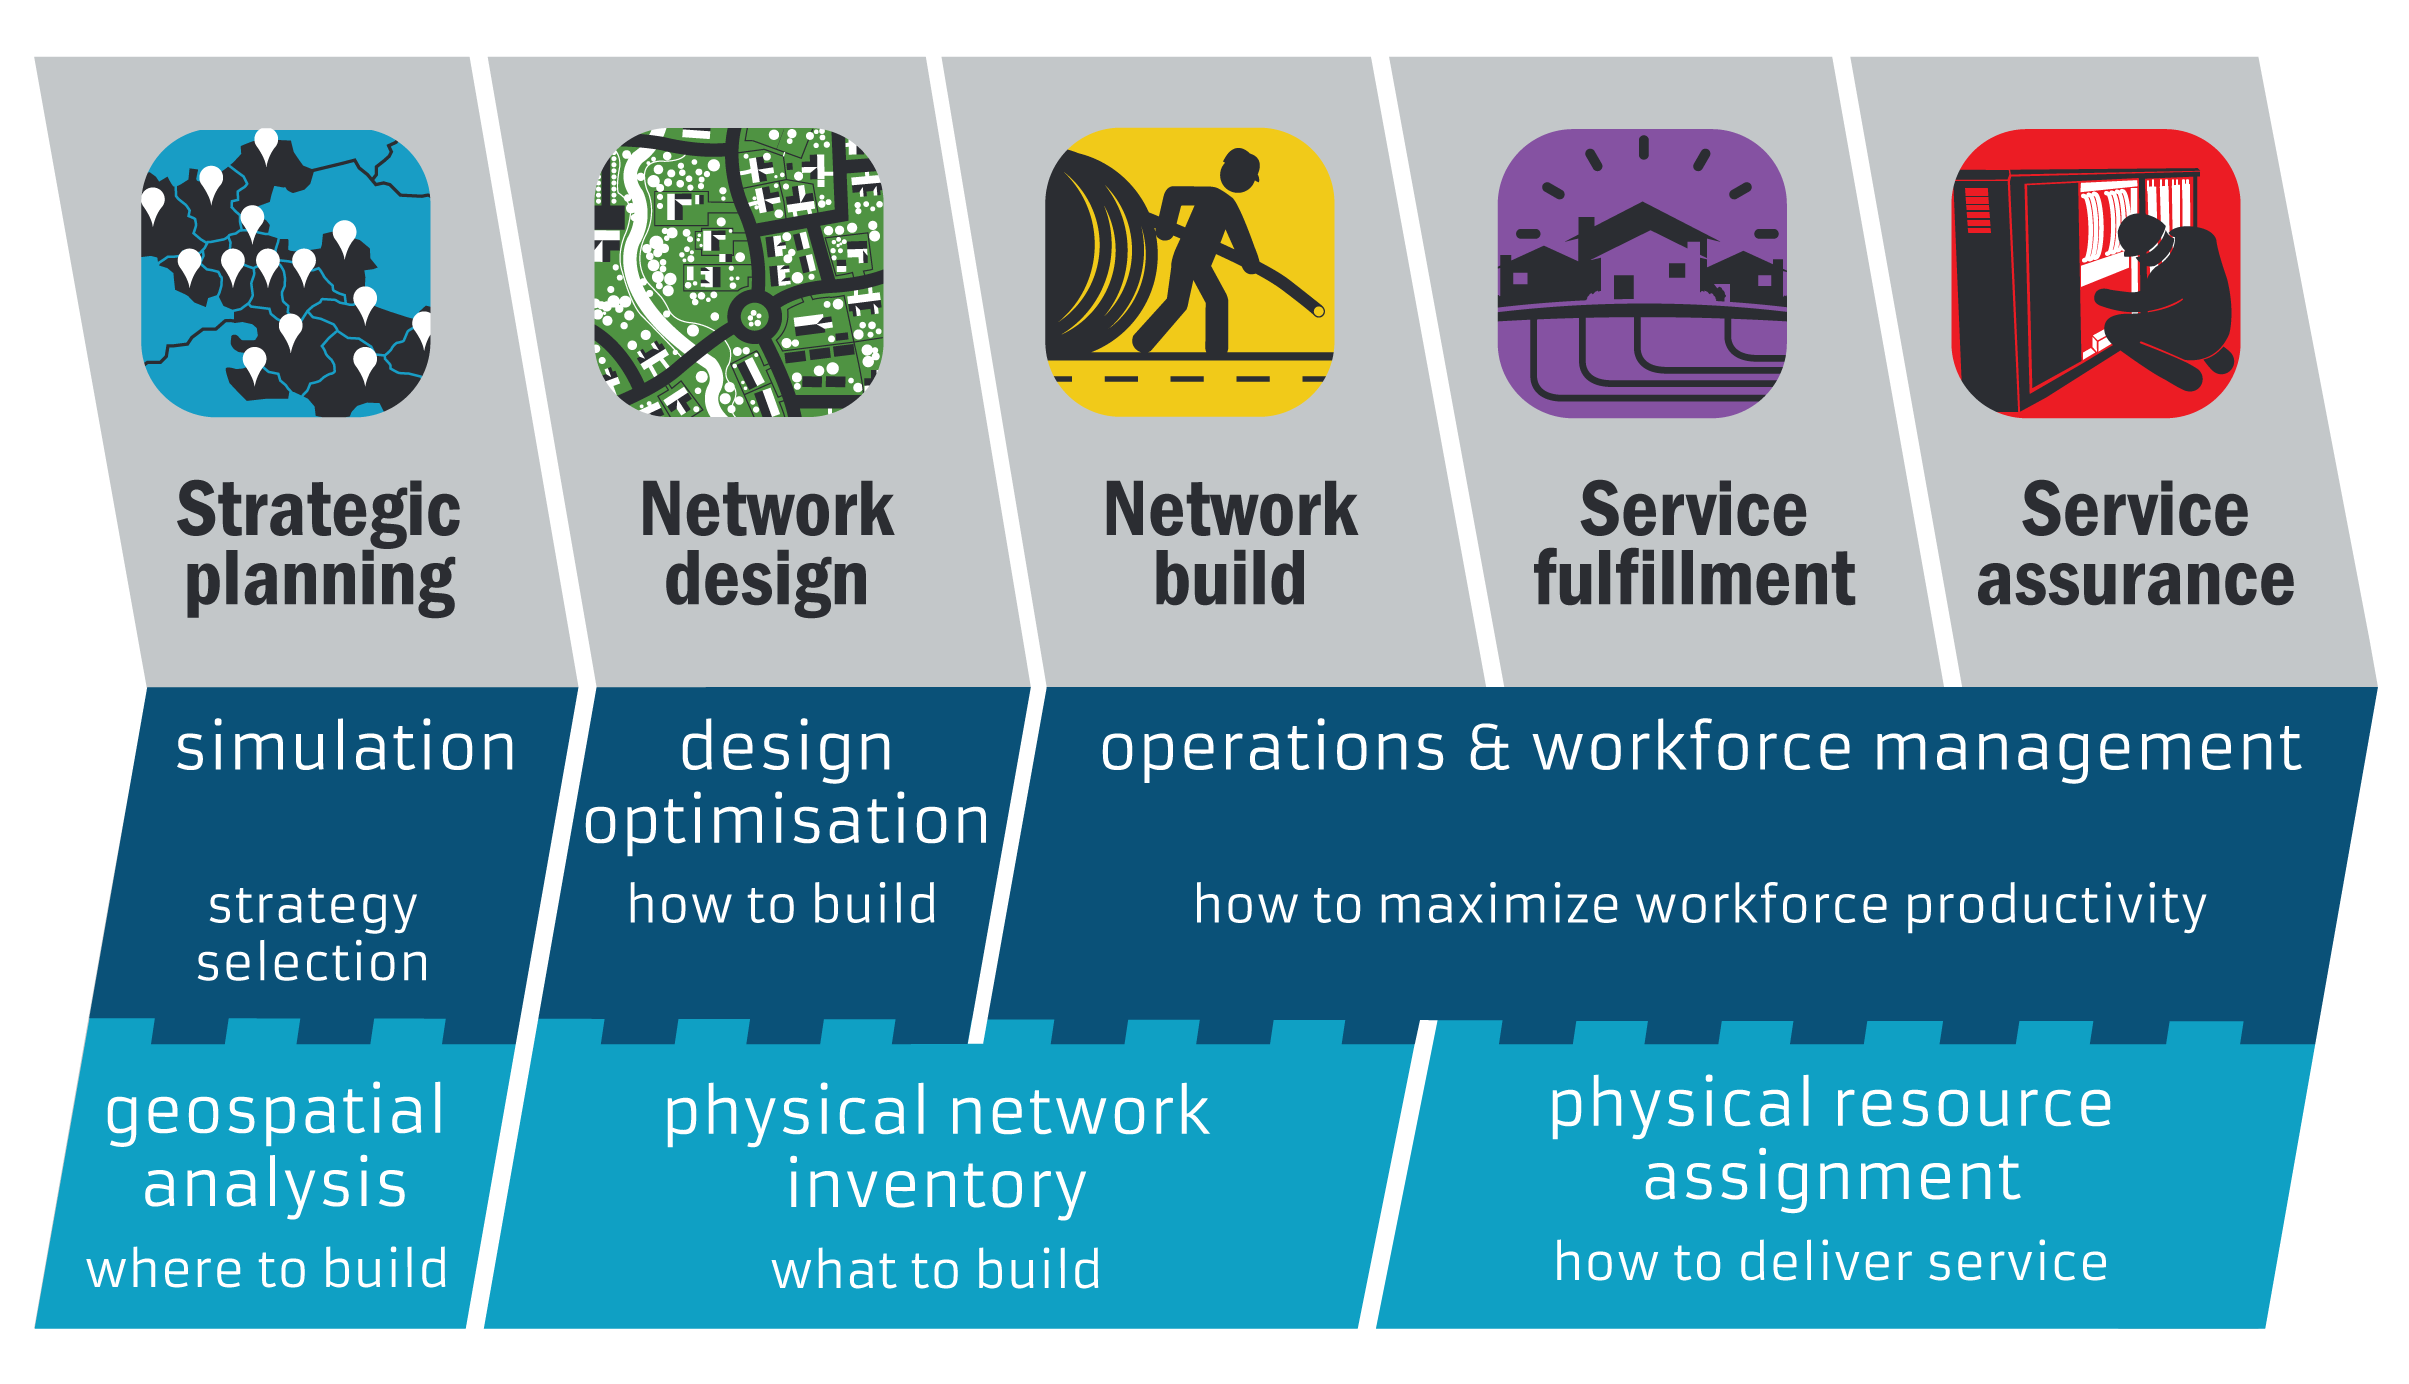 Net planning. Network Design. Strategic workforce planning стратегическое планирование. Strategic Network Design. Network Planner.